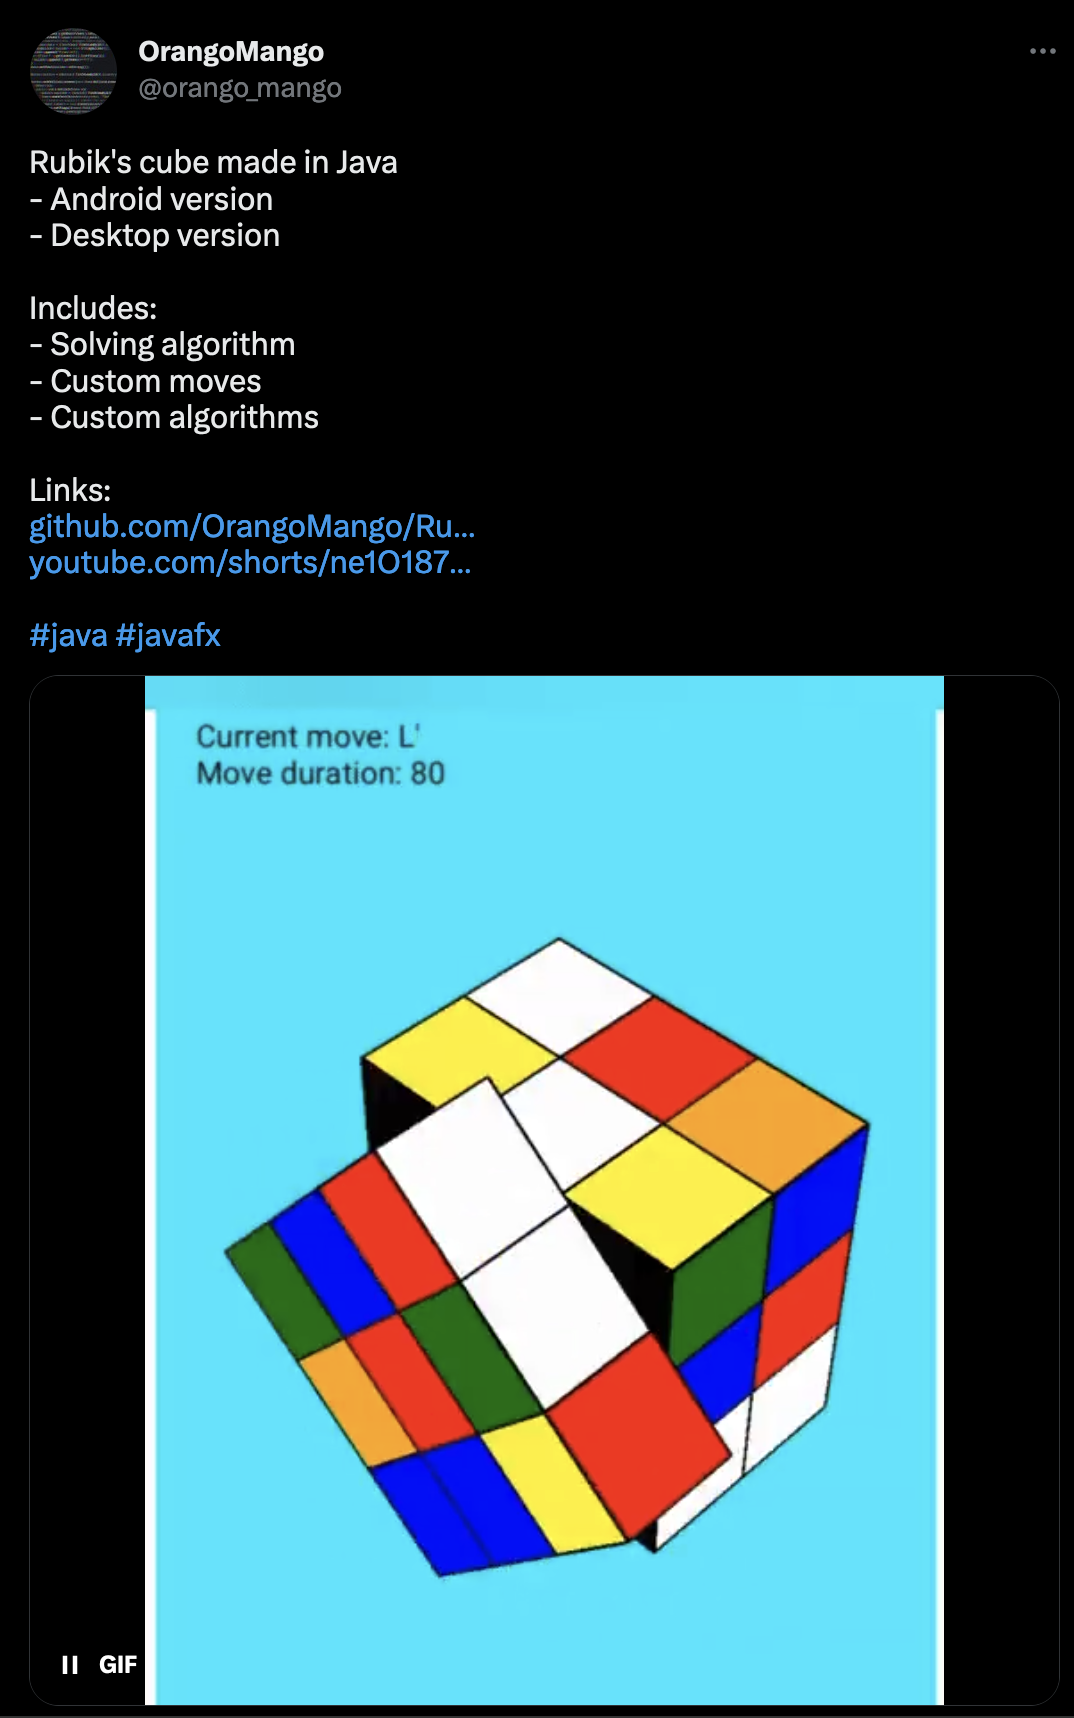 Screenshot of tweet with Rubik's Cube